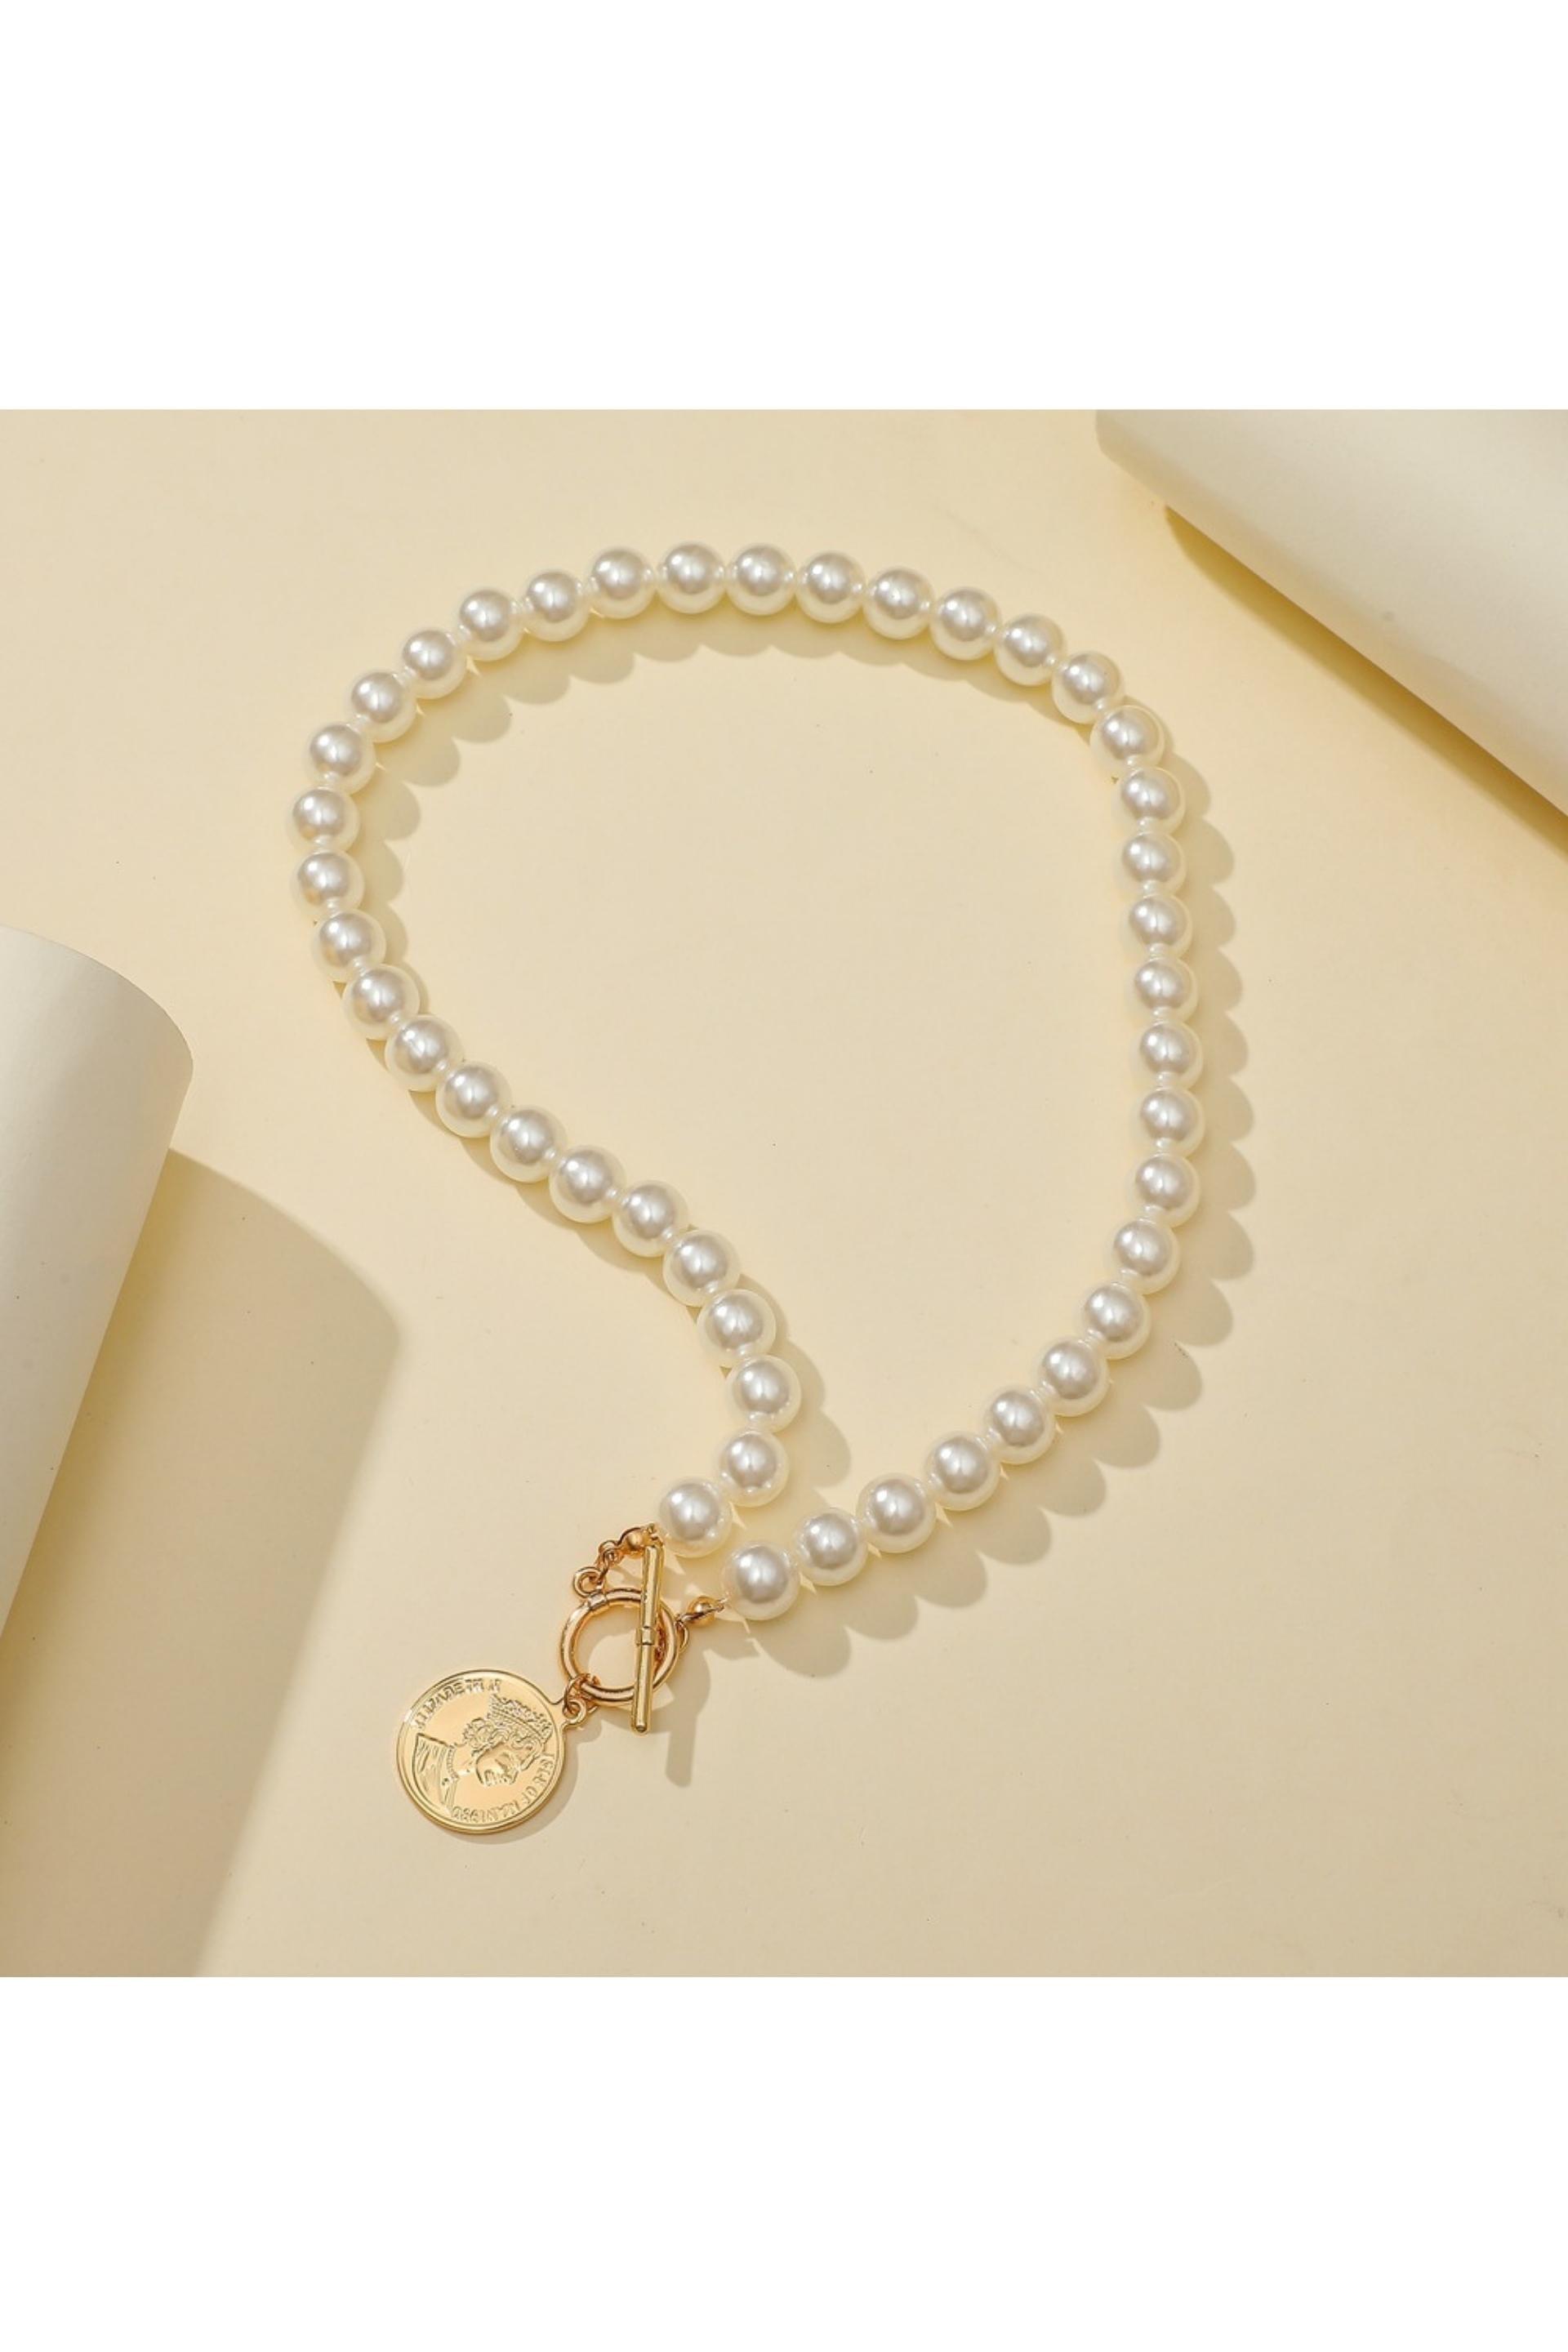 Firangi Yarn Alloy lock Imitation Pearl Necklace For Men